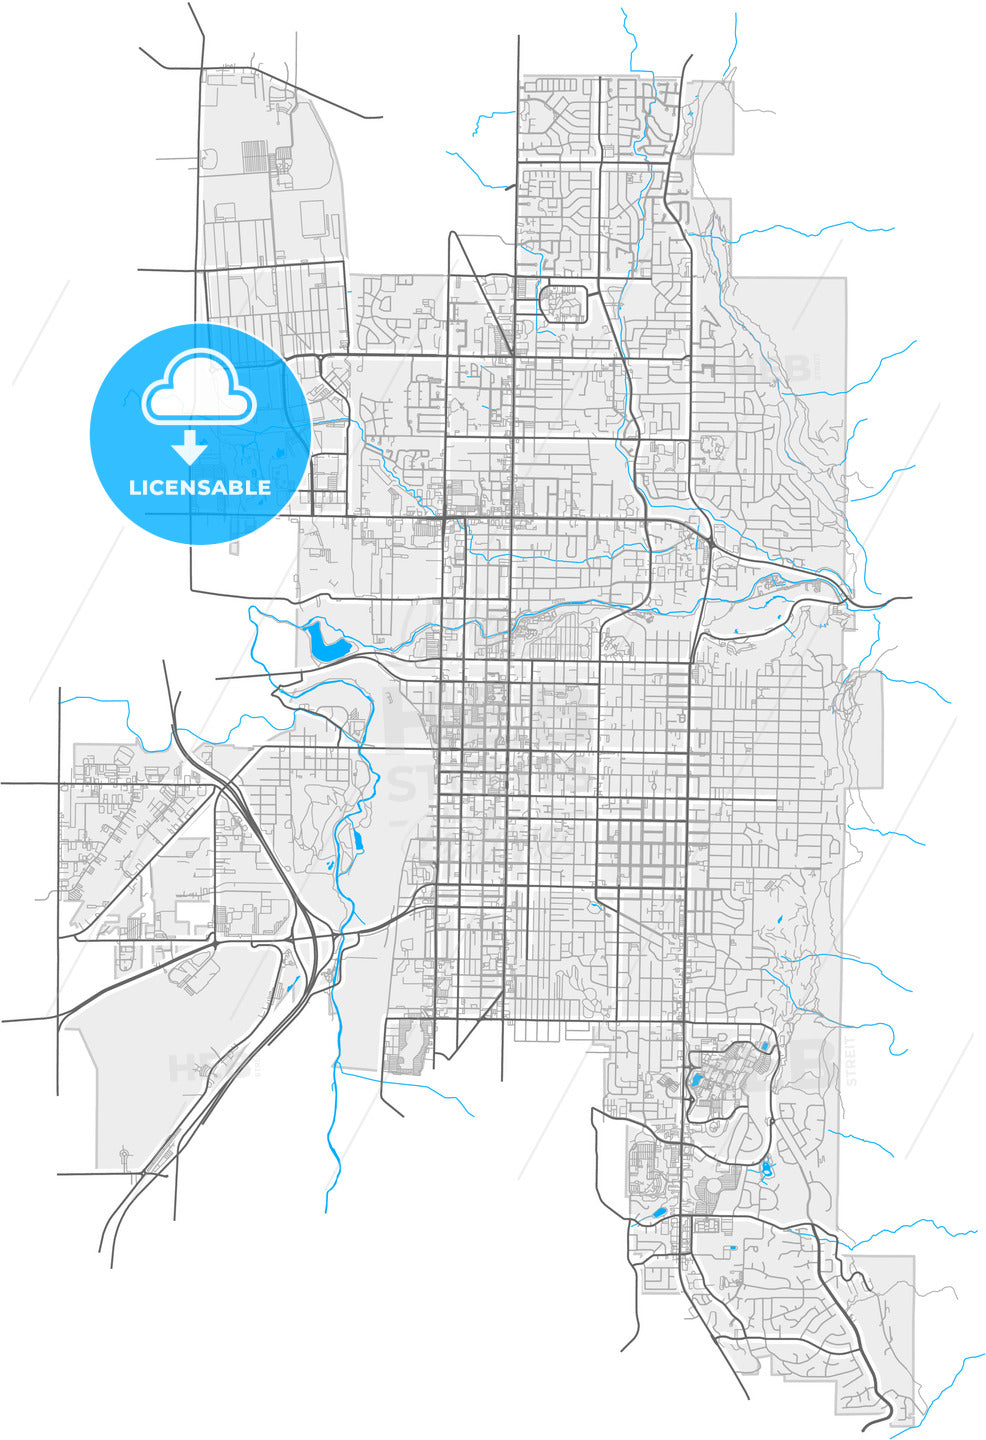 Ogden, Utah, United States, high quality vector map